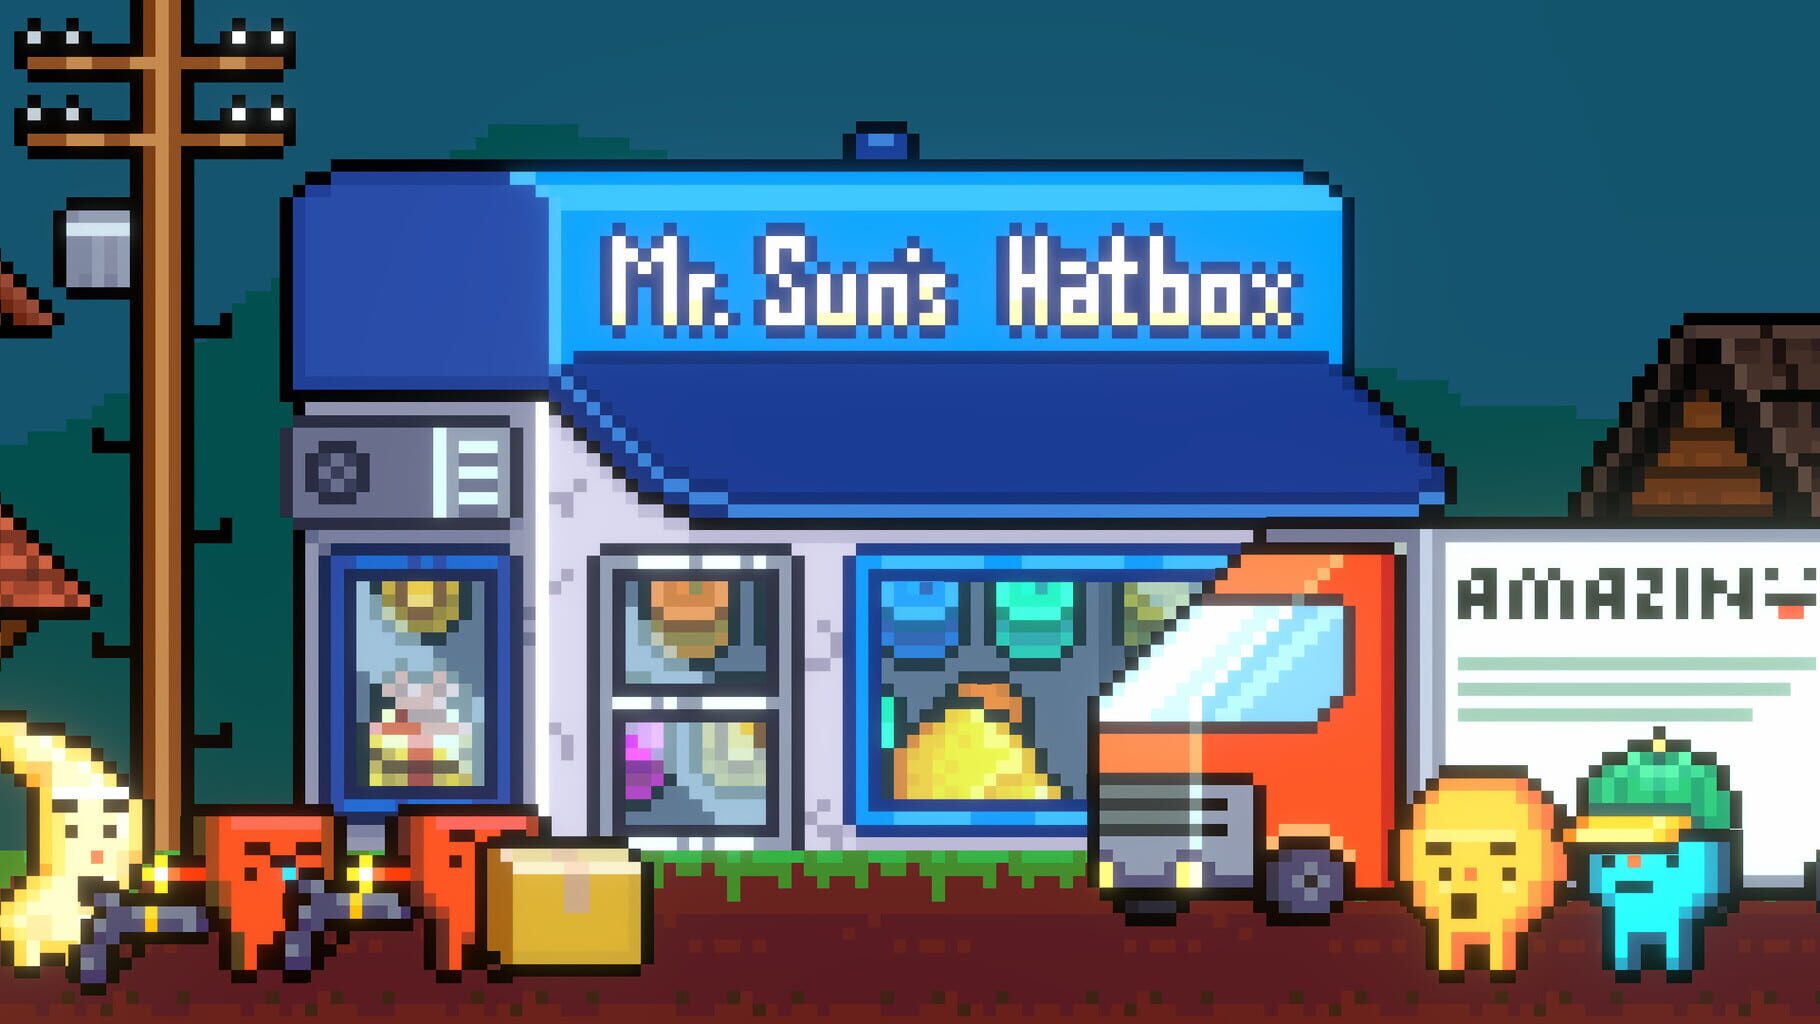 Mr. Sun's Hatbox.